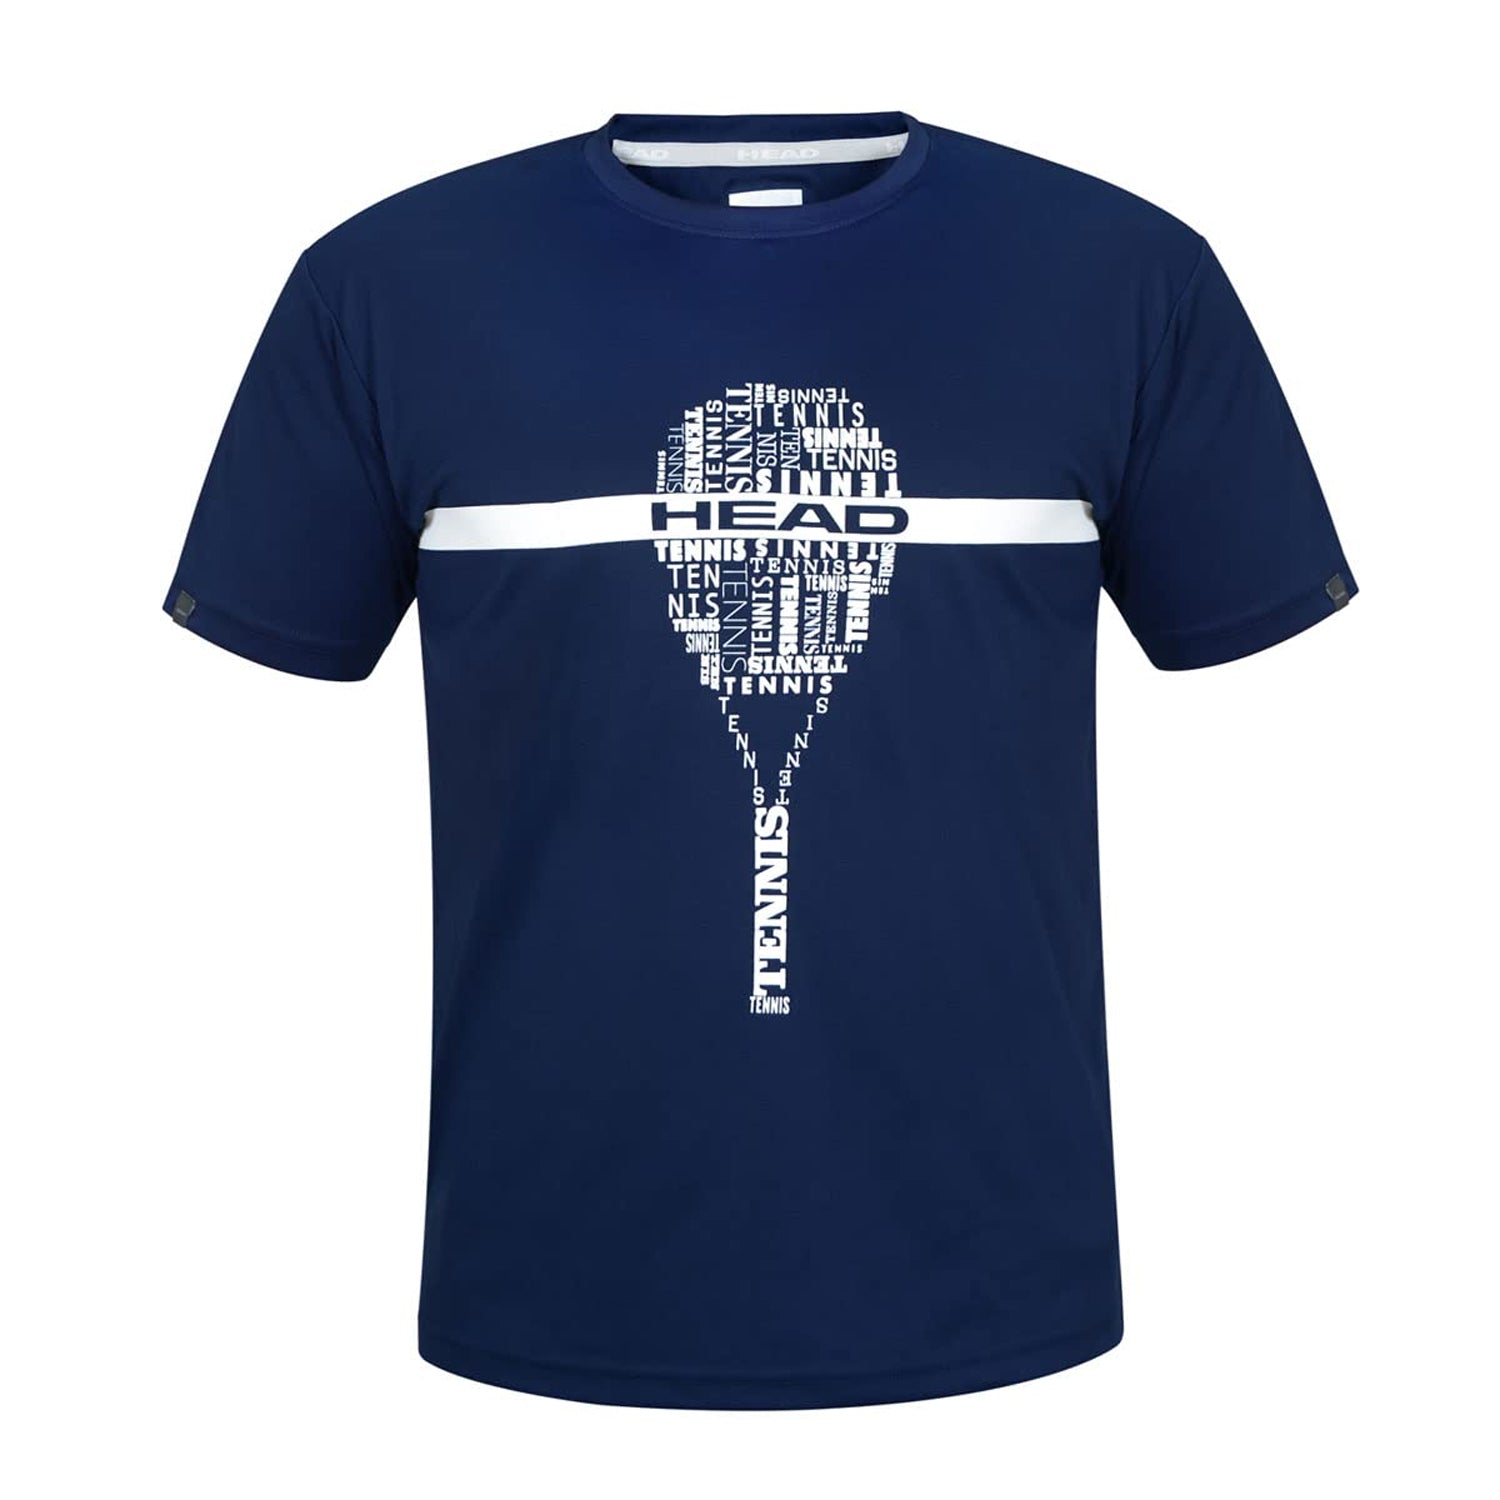 Head HCD-349 T-Shirt, Navy - Best Price online Prokicksports.com